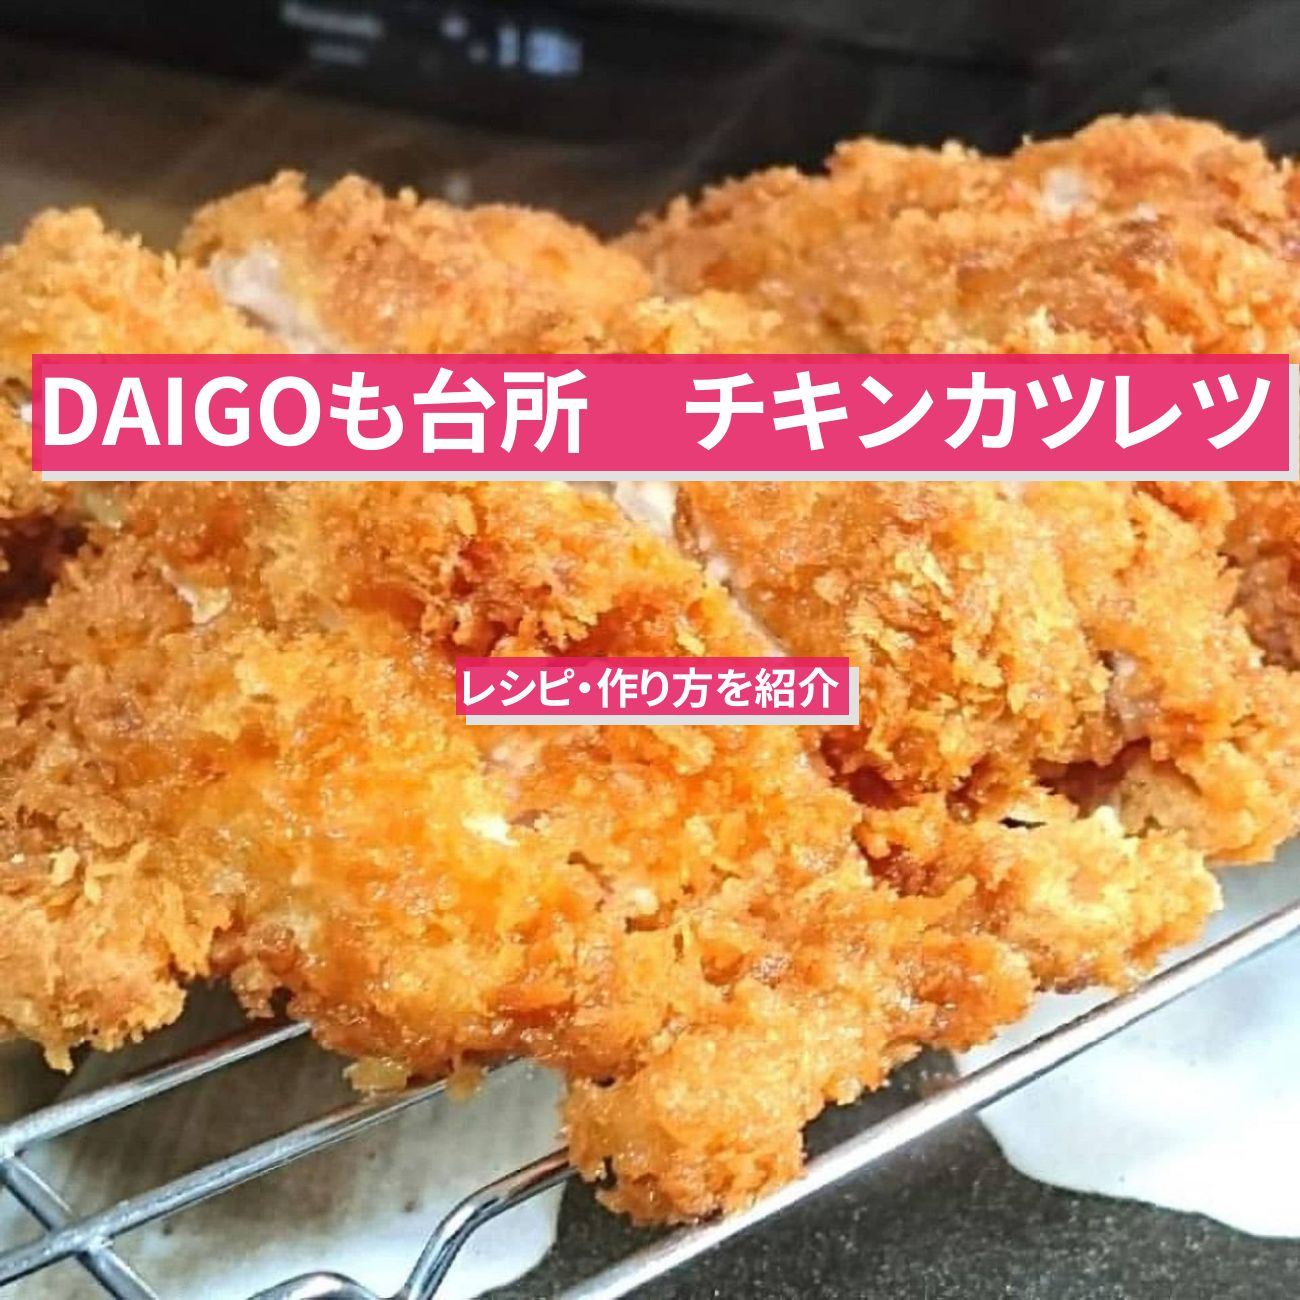 【DAIGOも台所】『チキンカツレツ』のレシピ・作り方を紹介〔ダイゴも台所〕